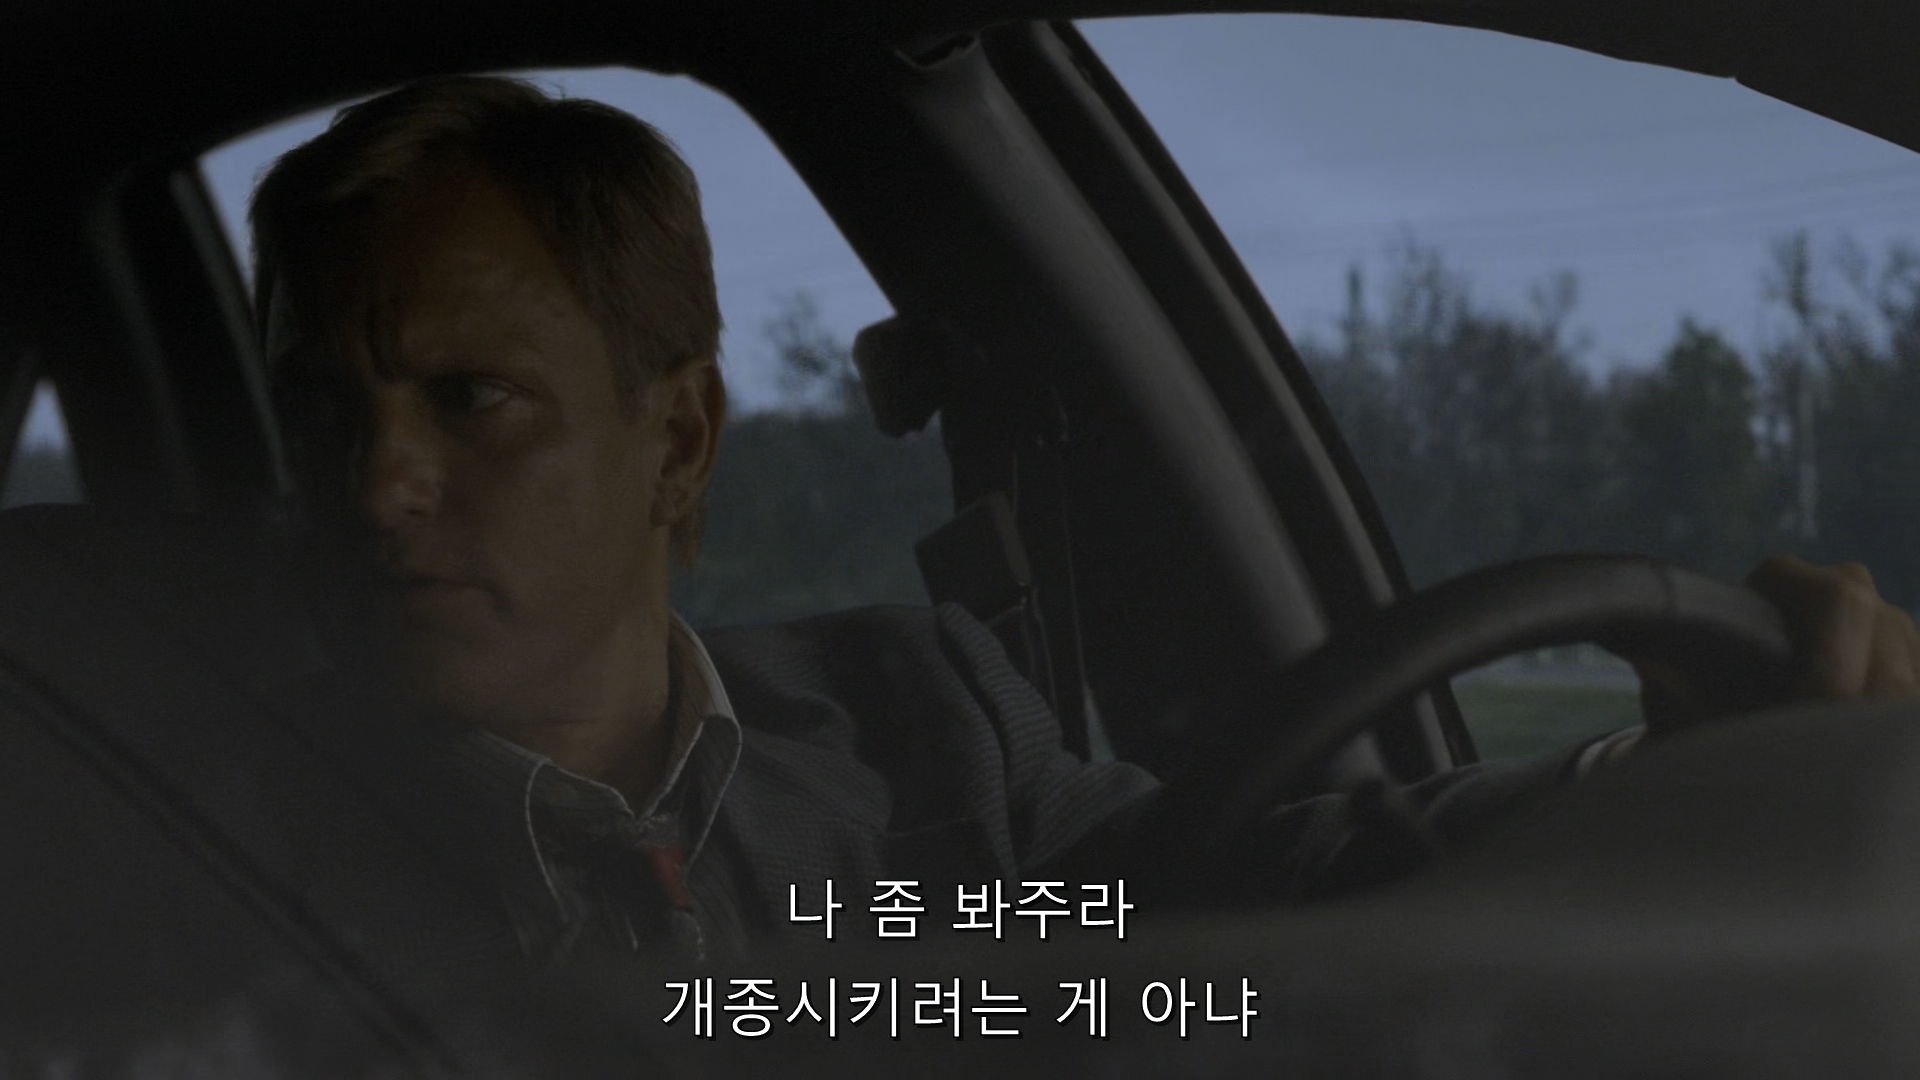 True Detective (2014) - S01E01 - The Long Bright Dark (1080p BluRay x265 afm72).mkv_000943574.jpg